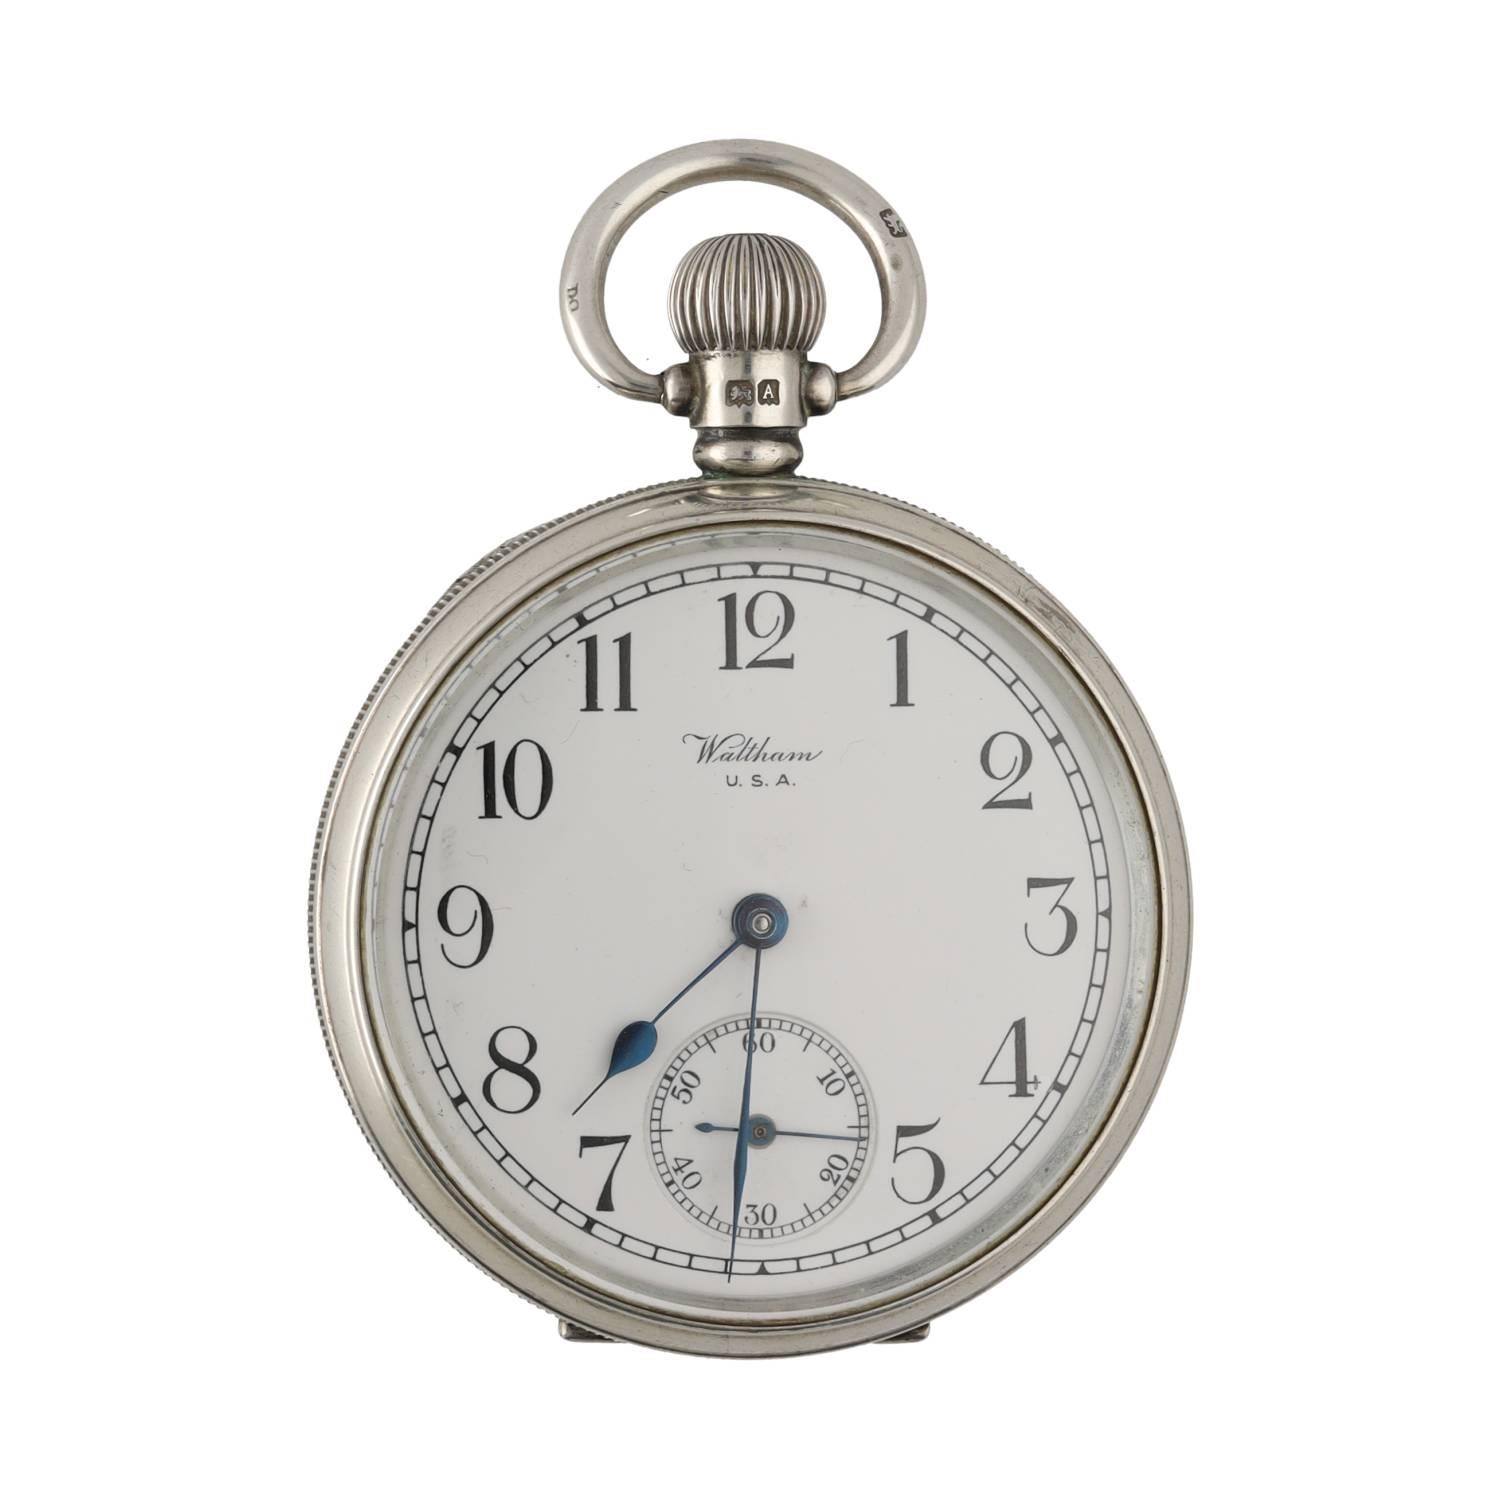 American Watham silver lever pocket watch, circa 1925, serial no. 25172283, signed movement,